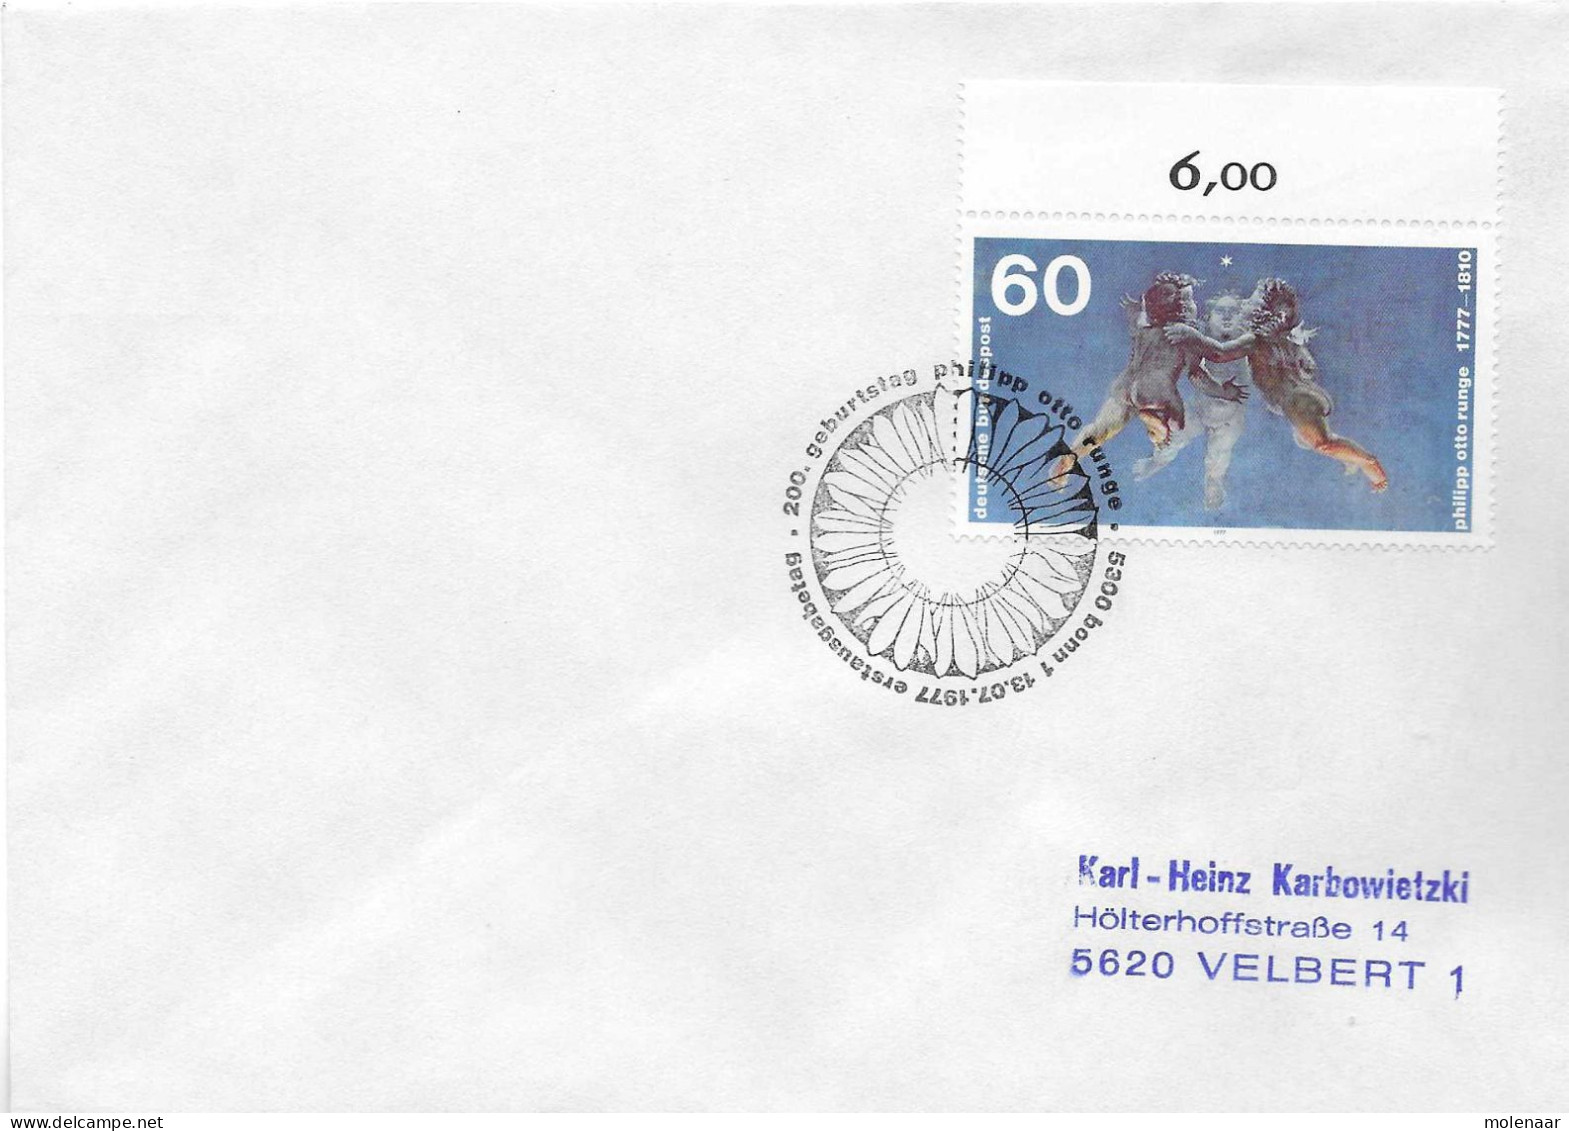 Postzegels > Europa > Duitsland > West-Duitsland > 1970-1979 > Brief Met No. 940 (17377) - Cartas & Documentos